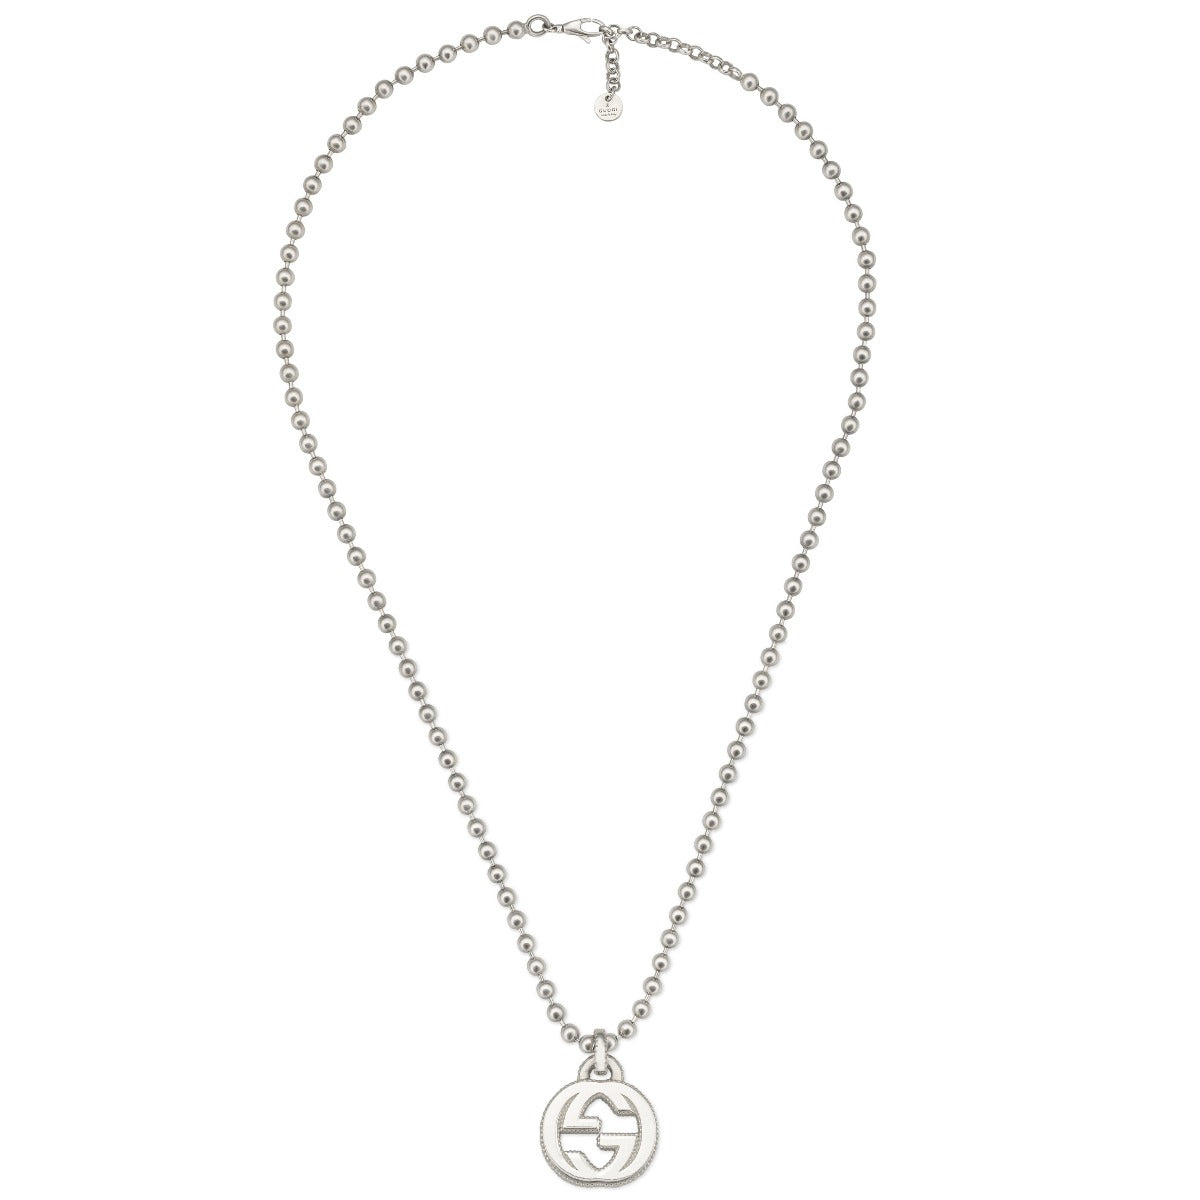 Gucci Interlocking Silver Beaded Necklace YBB47921700100U